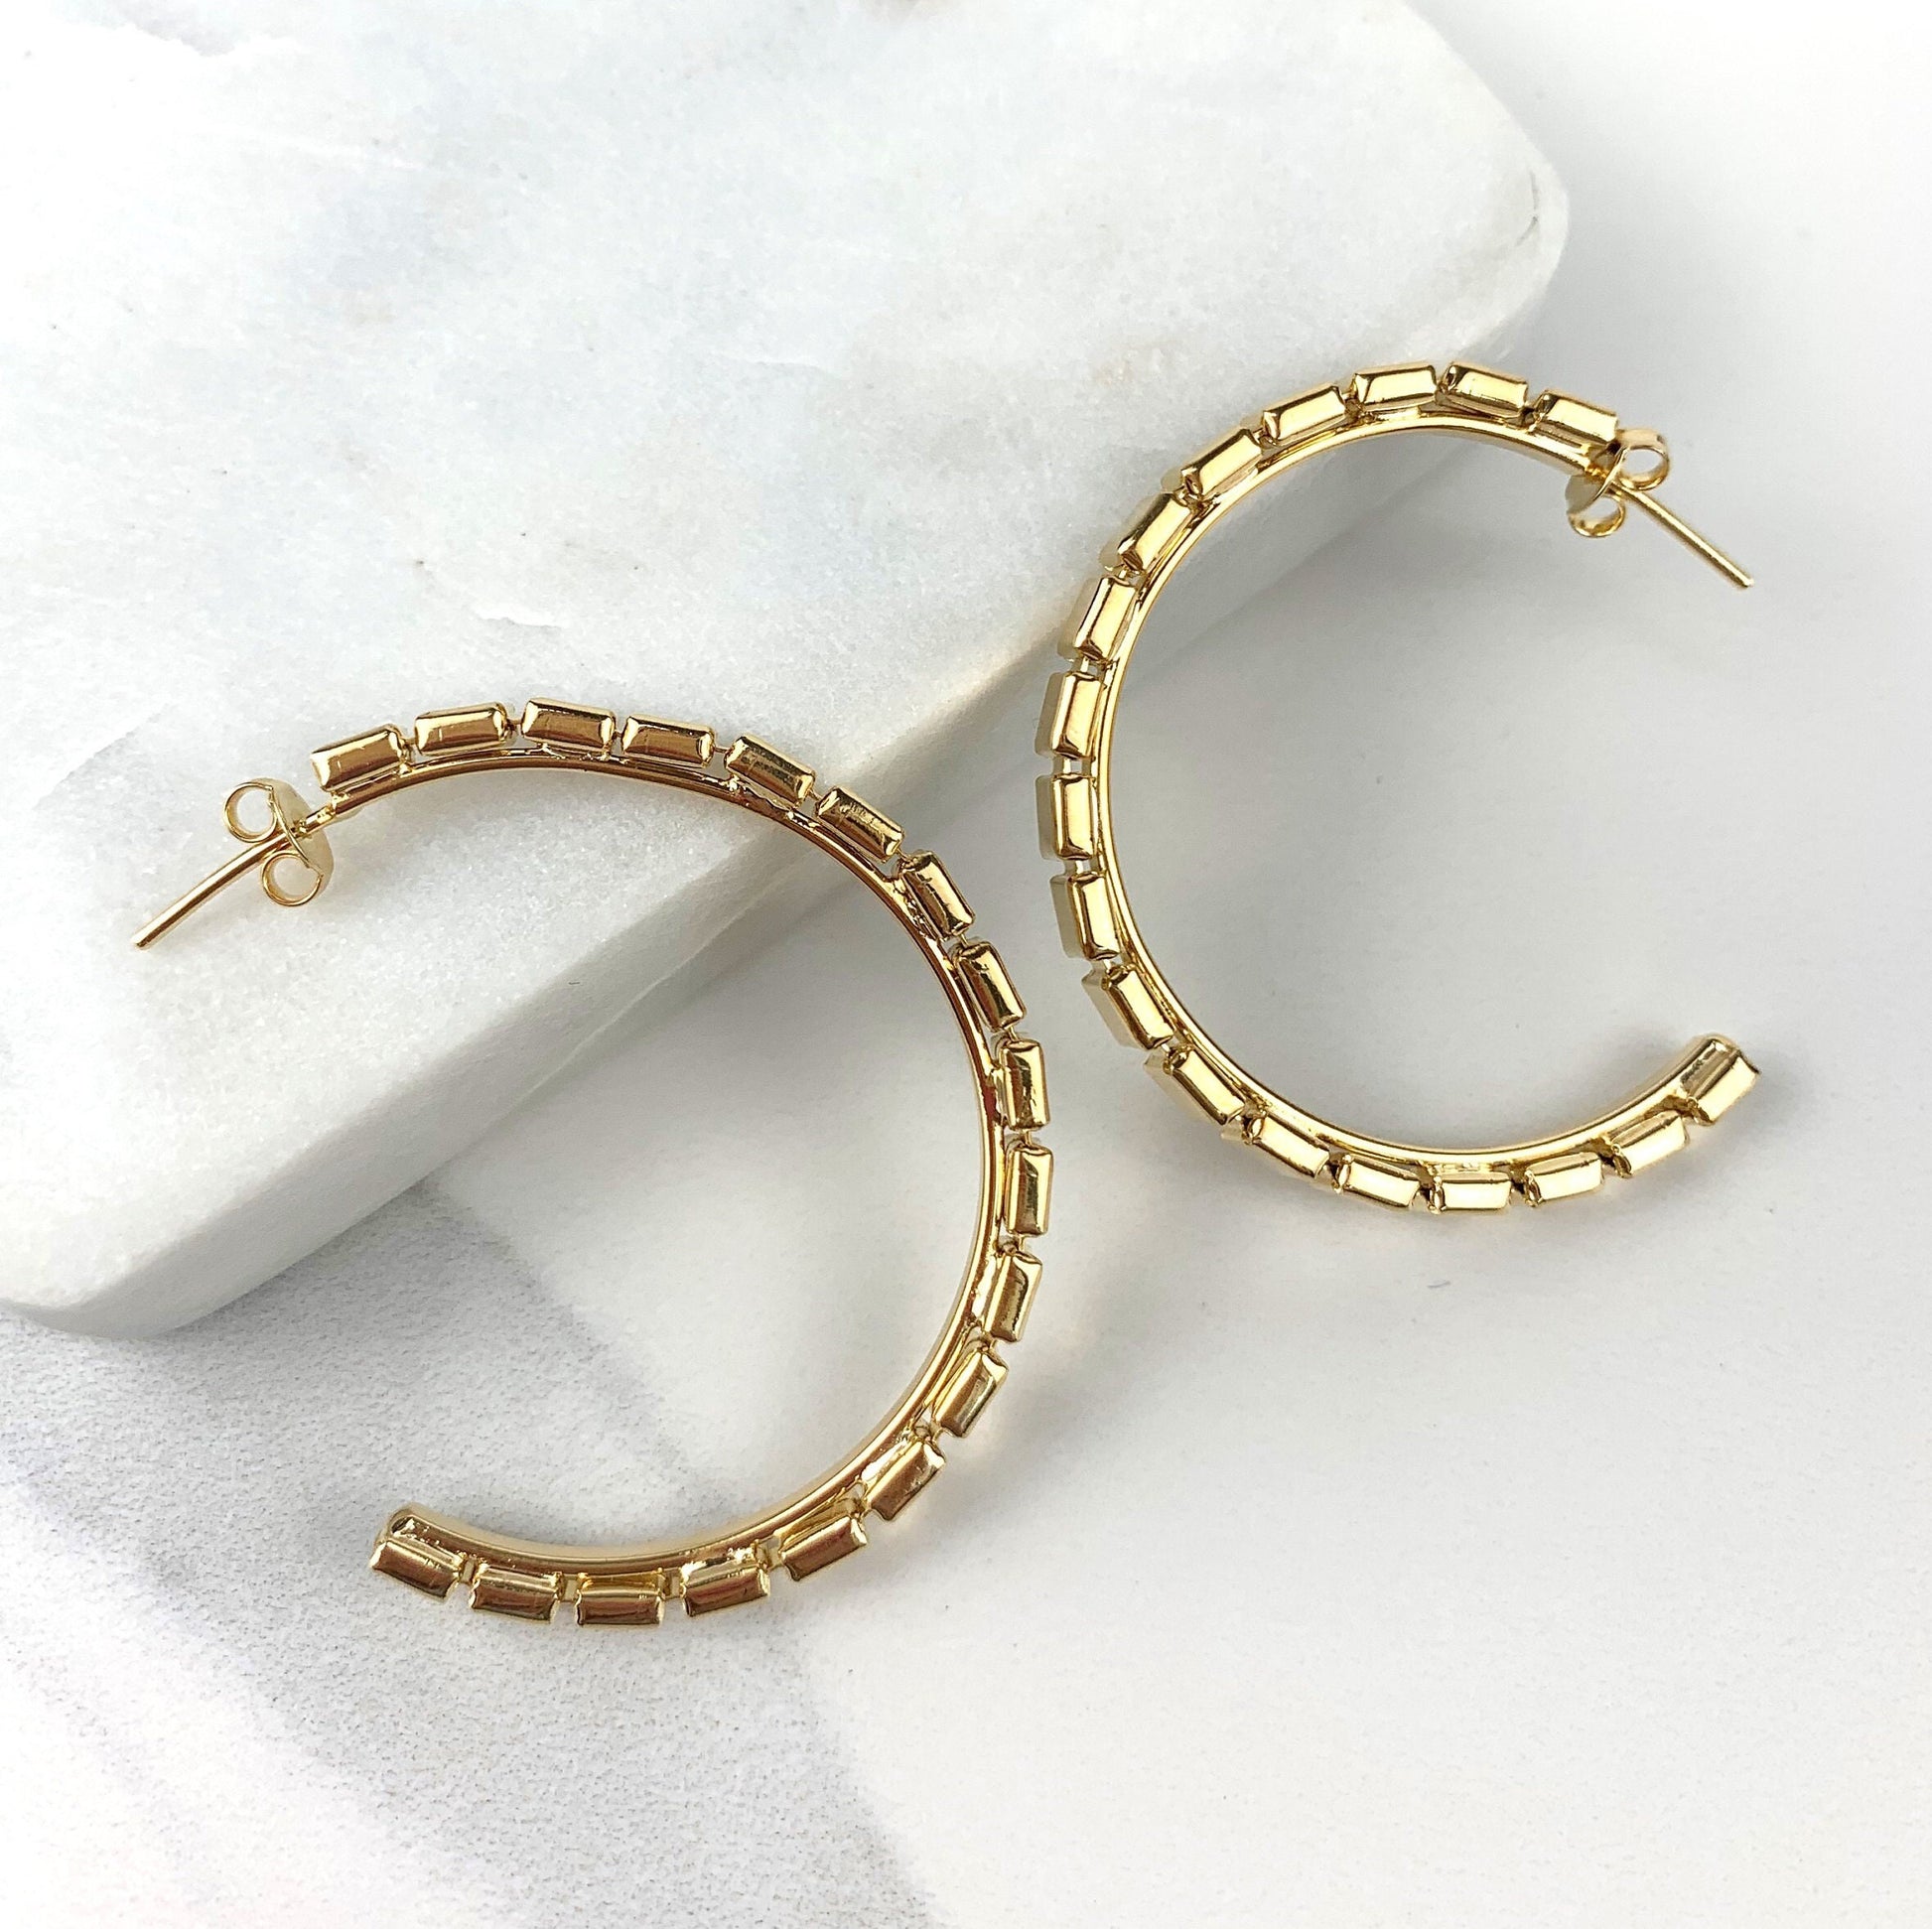 18k Gold Filled 3mm Squares Design for Hoop Earrings, C-Hoop, Wholesale Jewelry Making Supplies